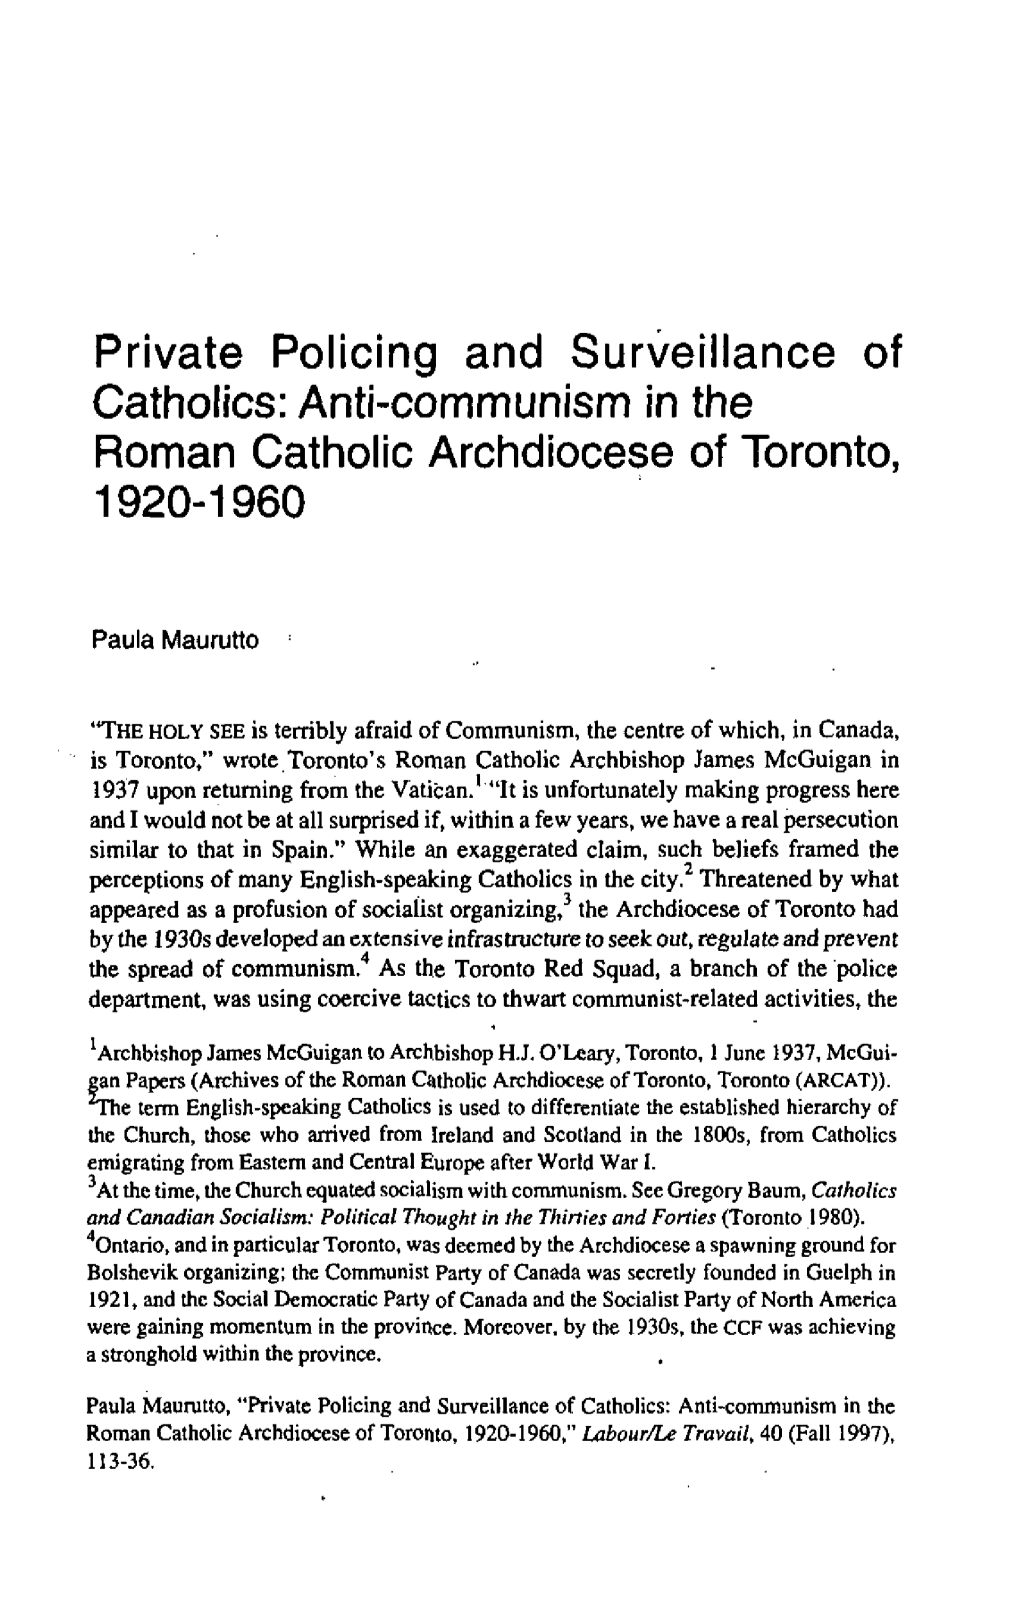 Anti-Communism in the Roman Catholic Archdiocese of Toronto, 1920-1960